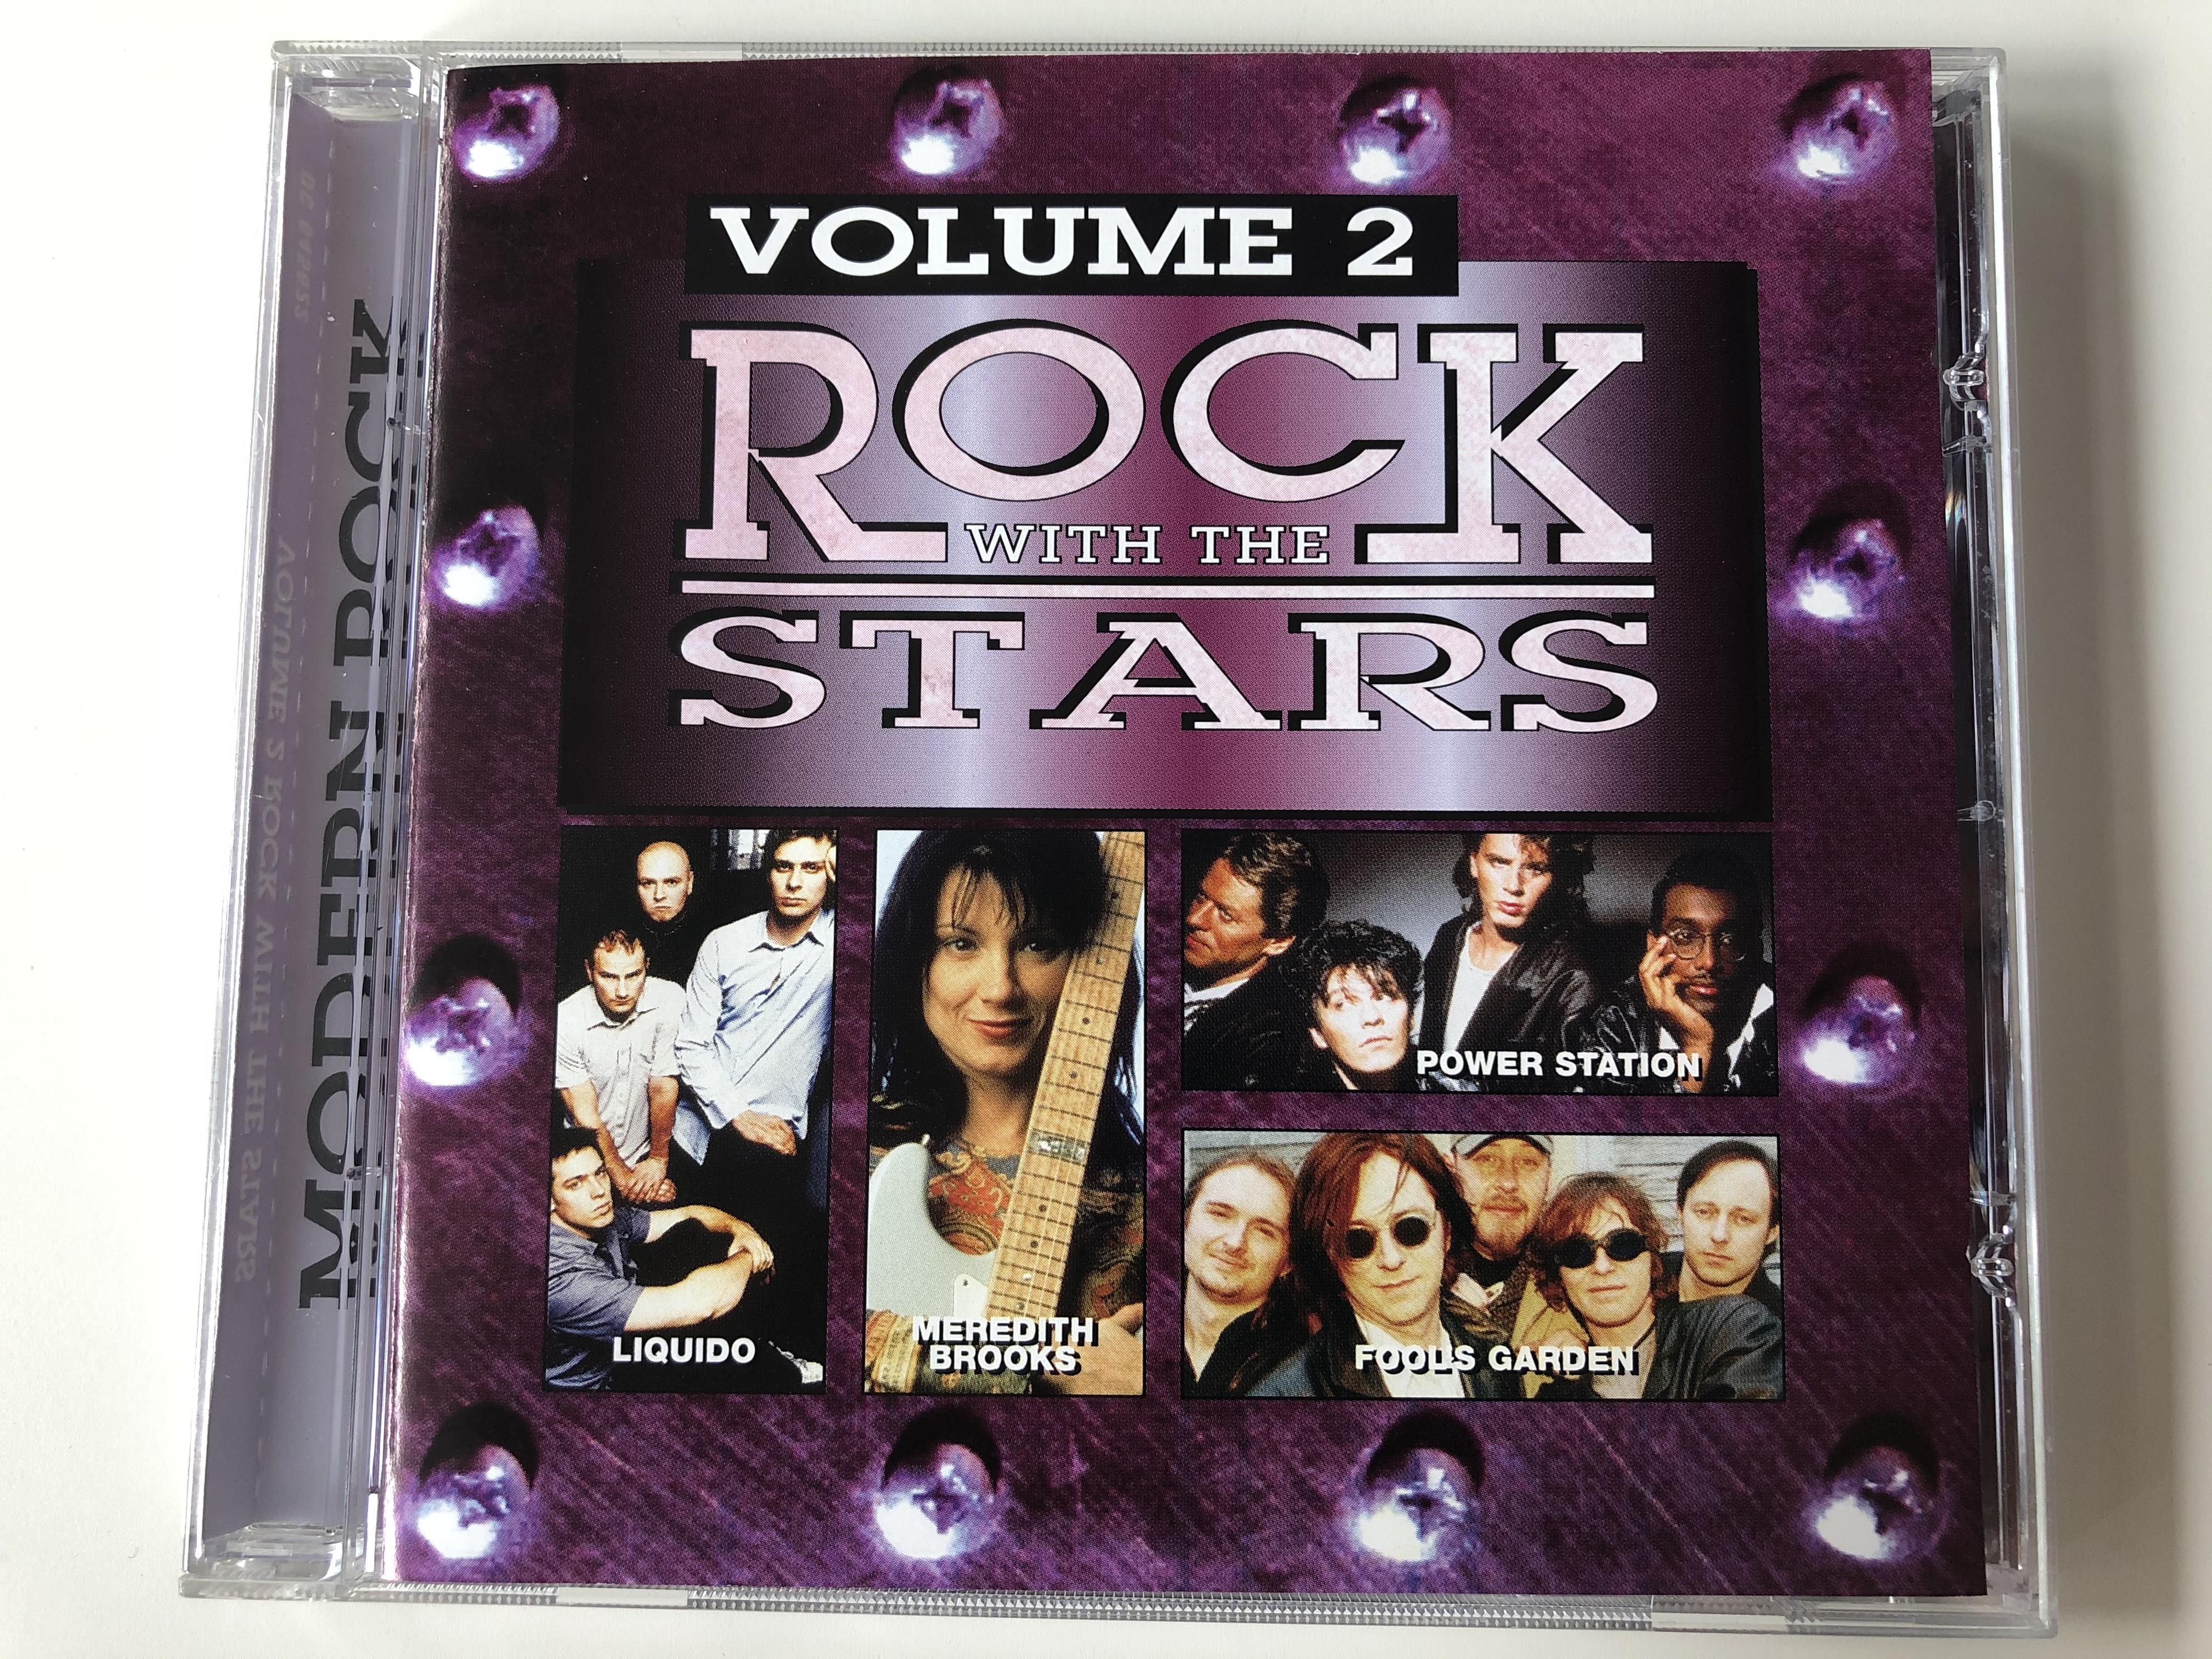 volume-2-rock-with-the-stars-liquido-meredith-brooks-power-station-foolis-garden-disky-audio-cd-2001-dc-645622-1-.jpg